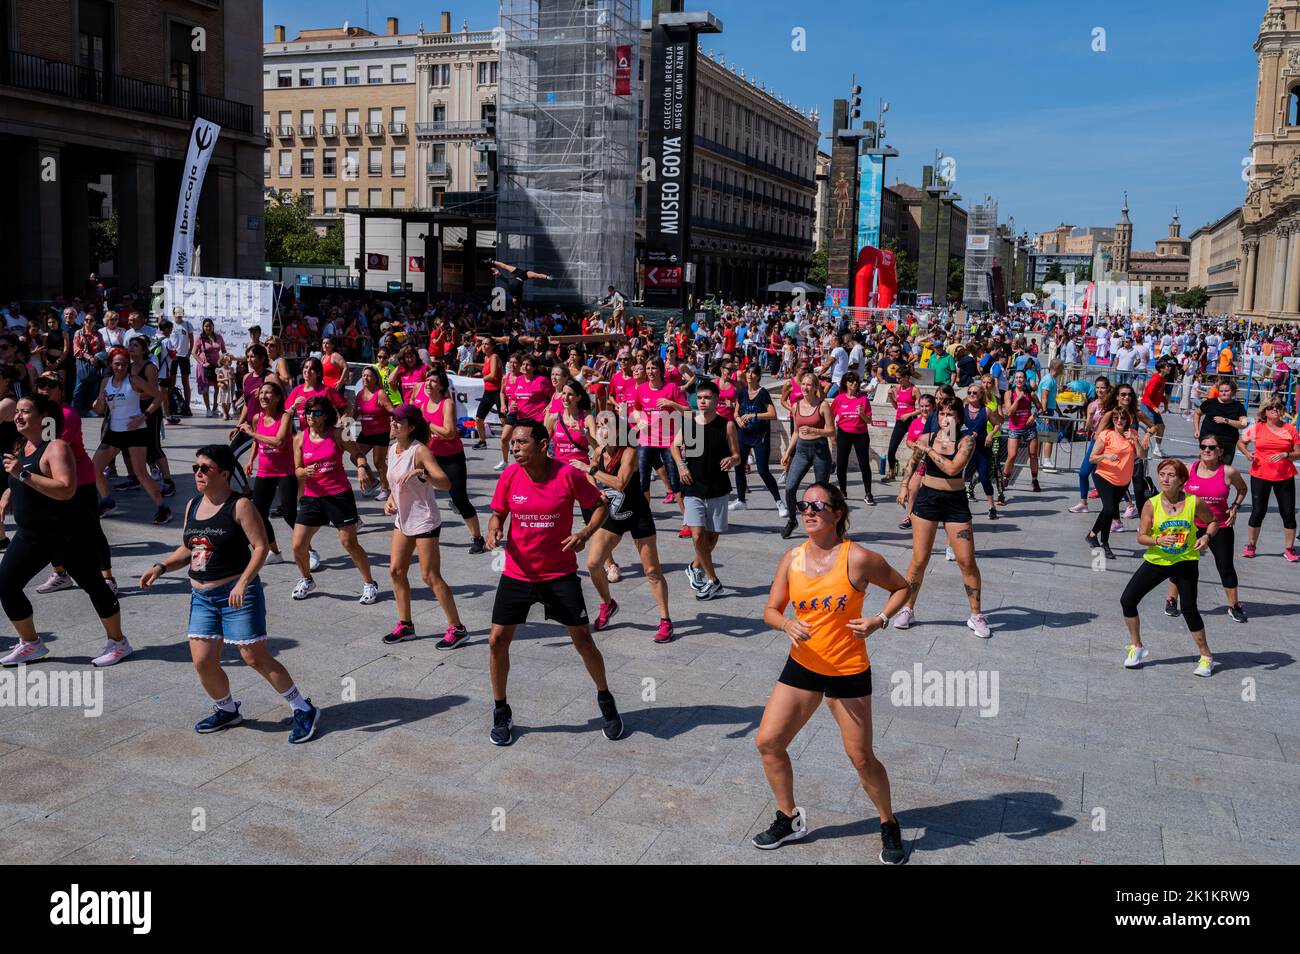 Group dance class at Sports Day multi-sports street event in Plaza del Pilar, Zaragoza, Spain Stock Photo